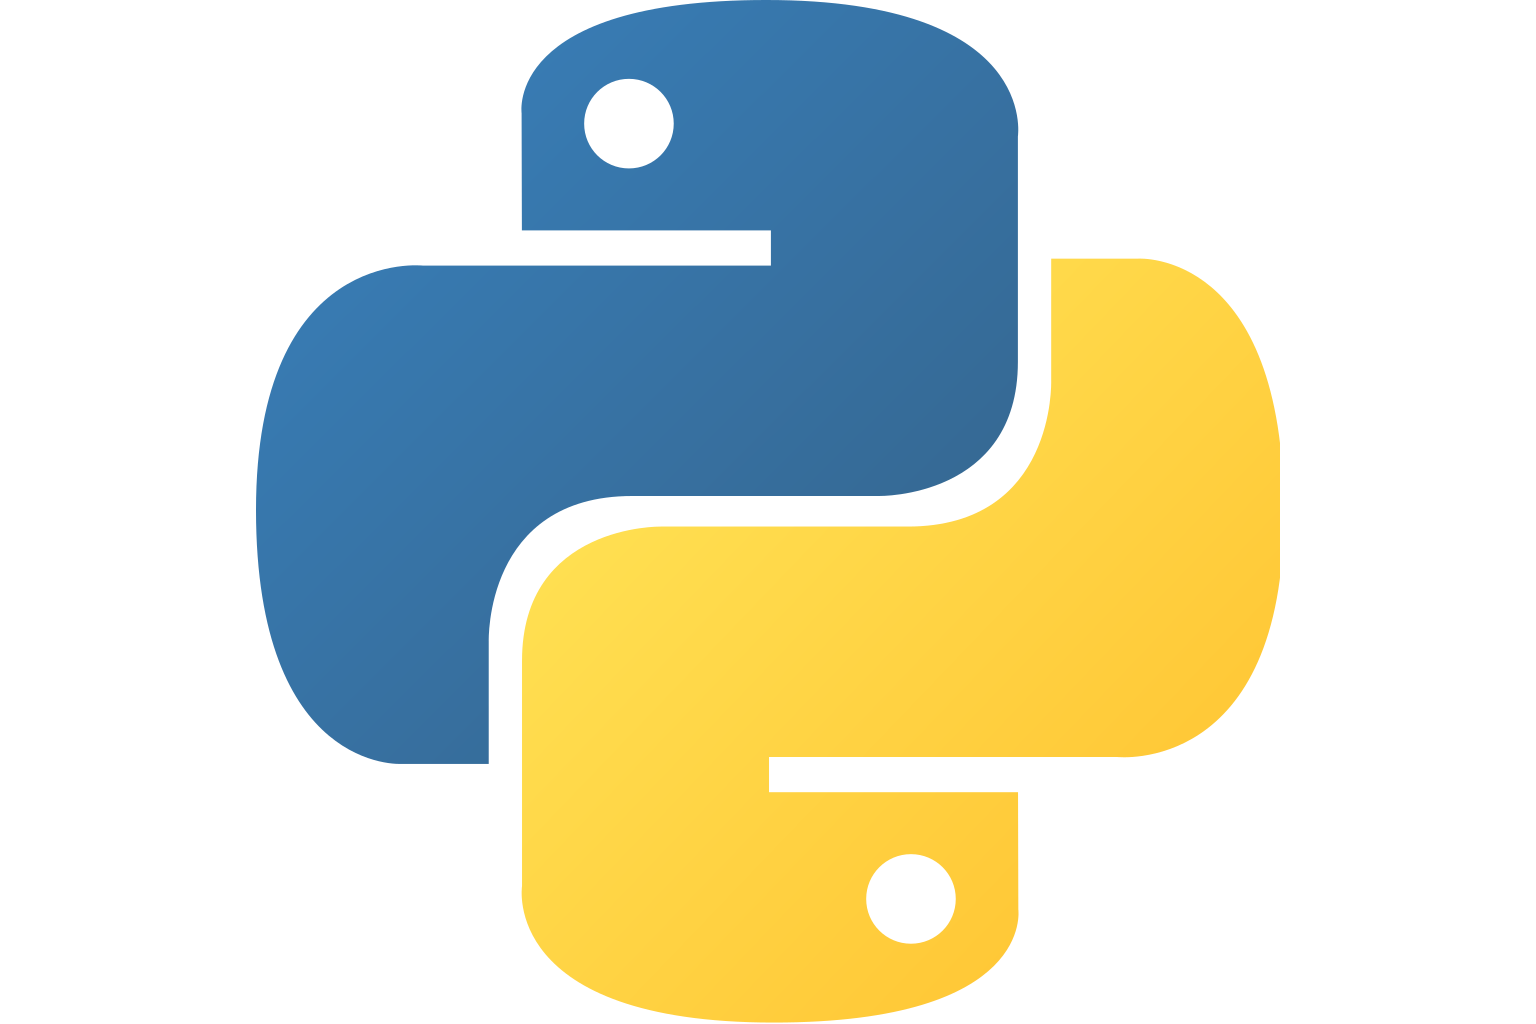 ../_images/python_logo.png